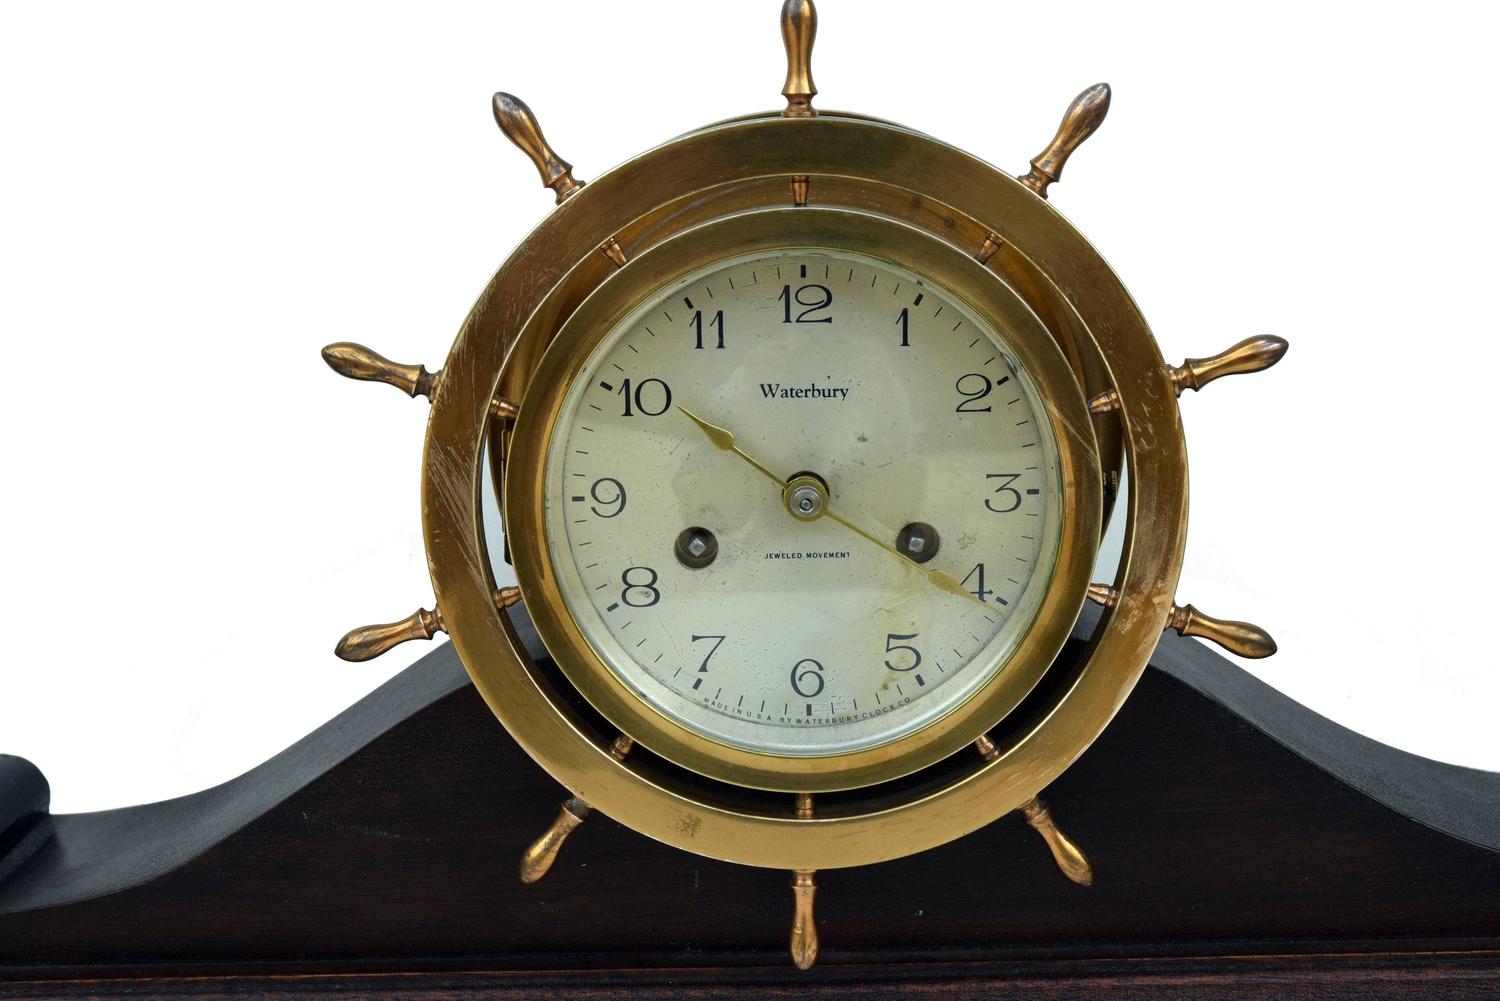 Waterbury book Reprint Ship's Bell Clocks 